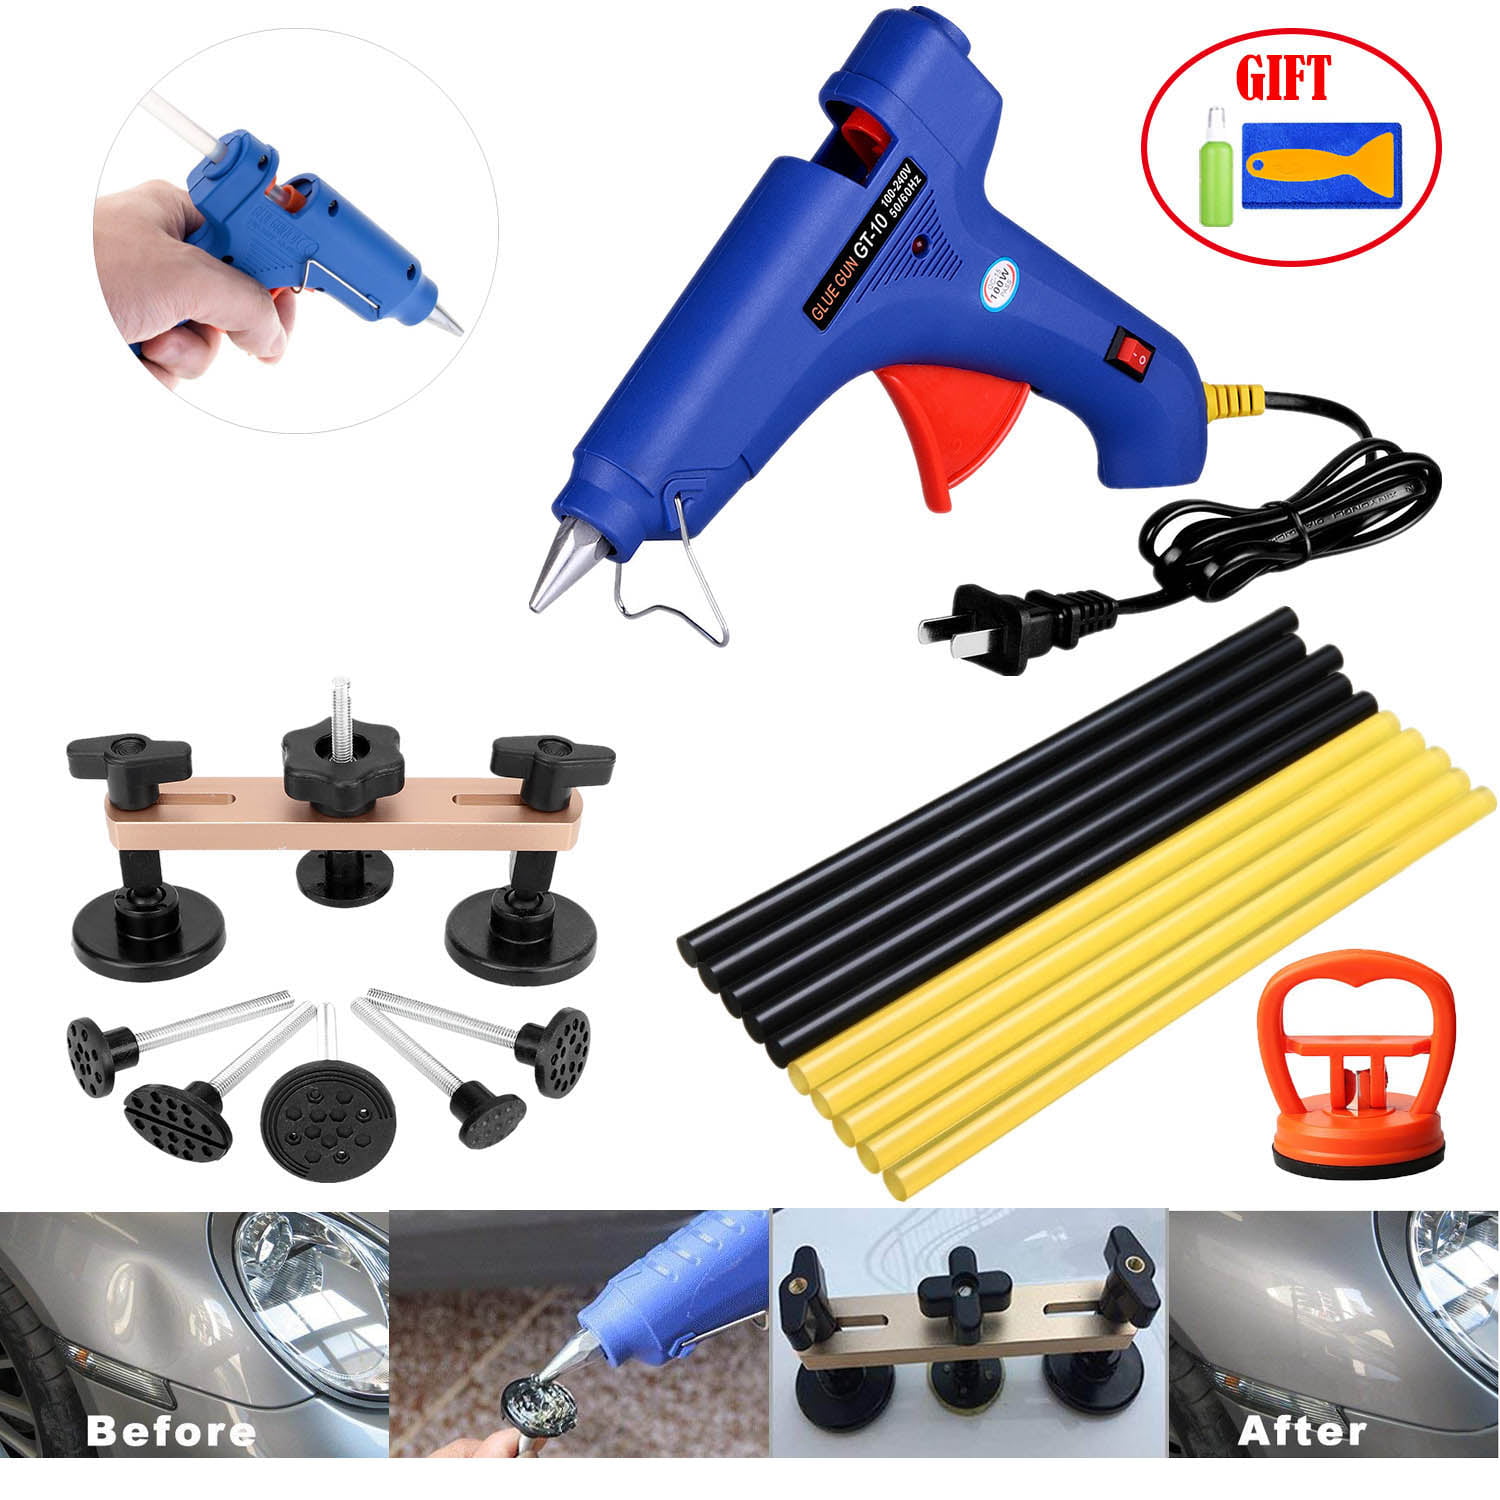 Pops-a-dent Car Body Dent Repair Tool Kit   DIY Puller Bridge Glue Gun Stick set